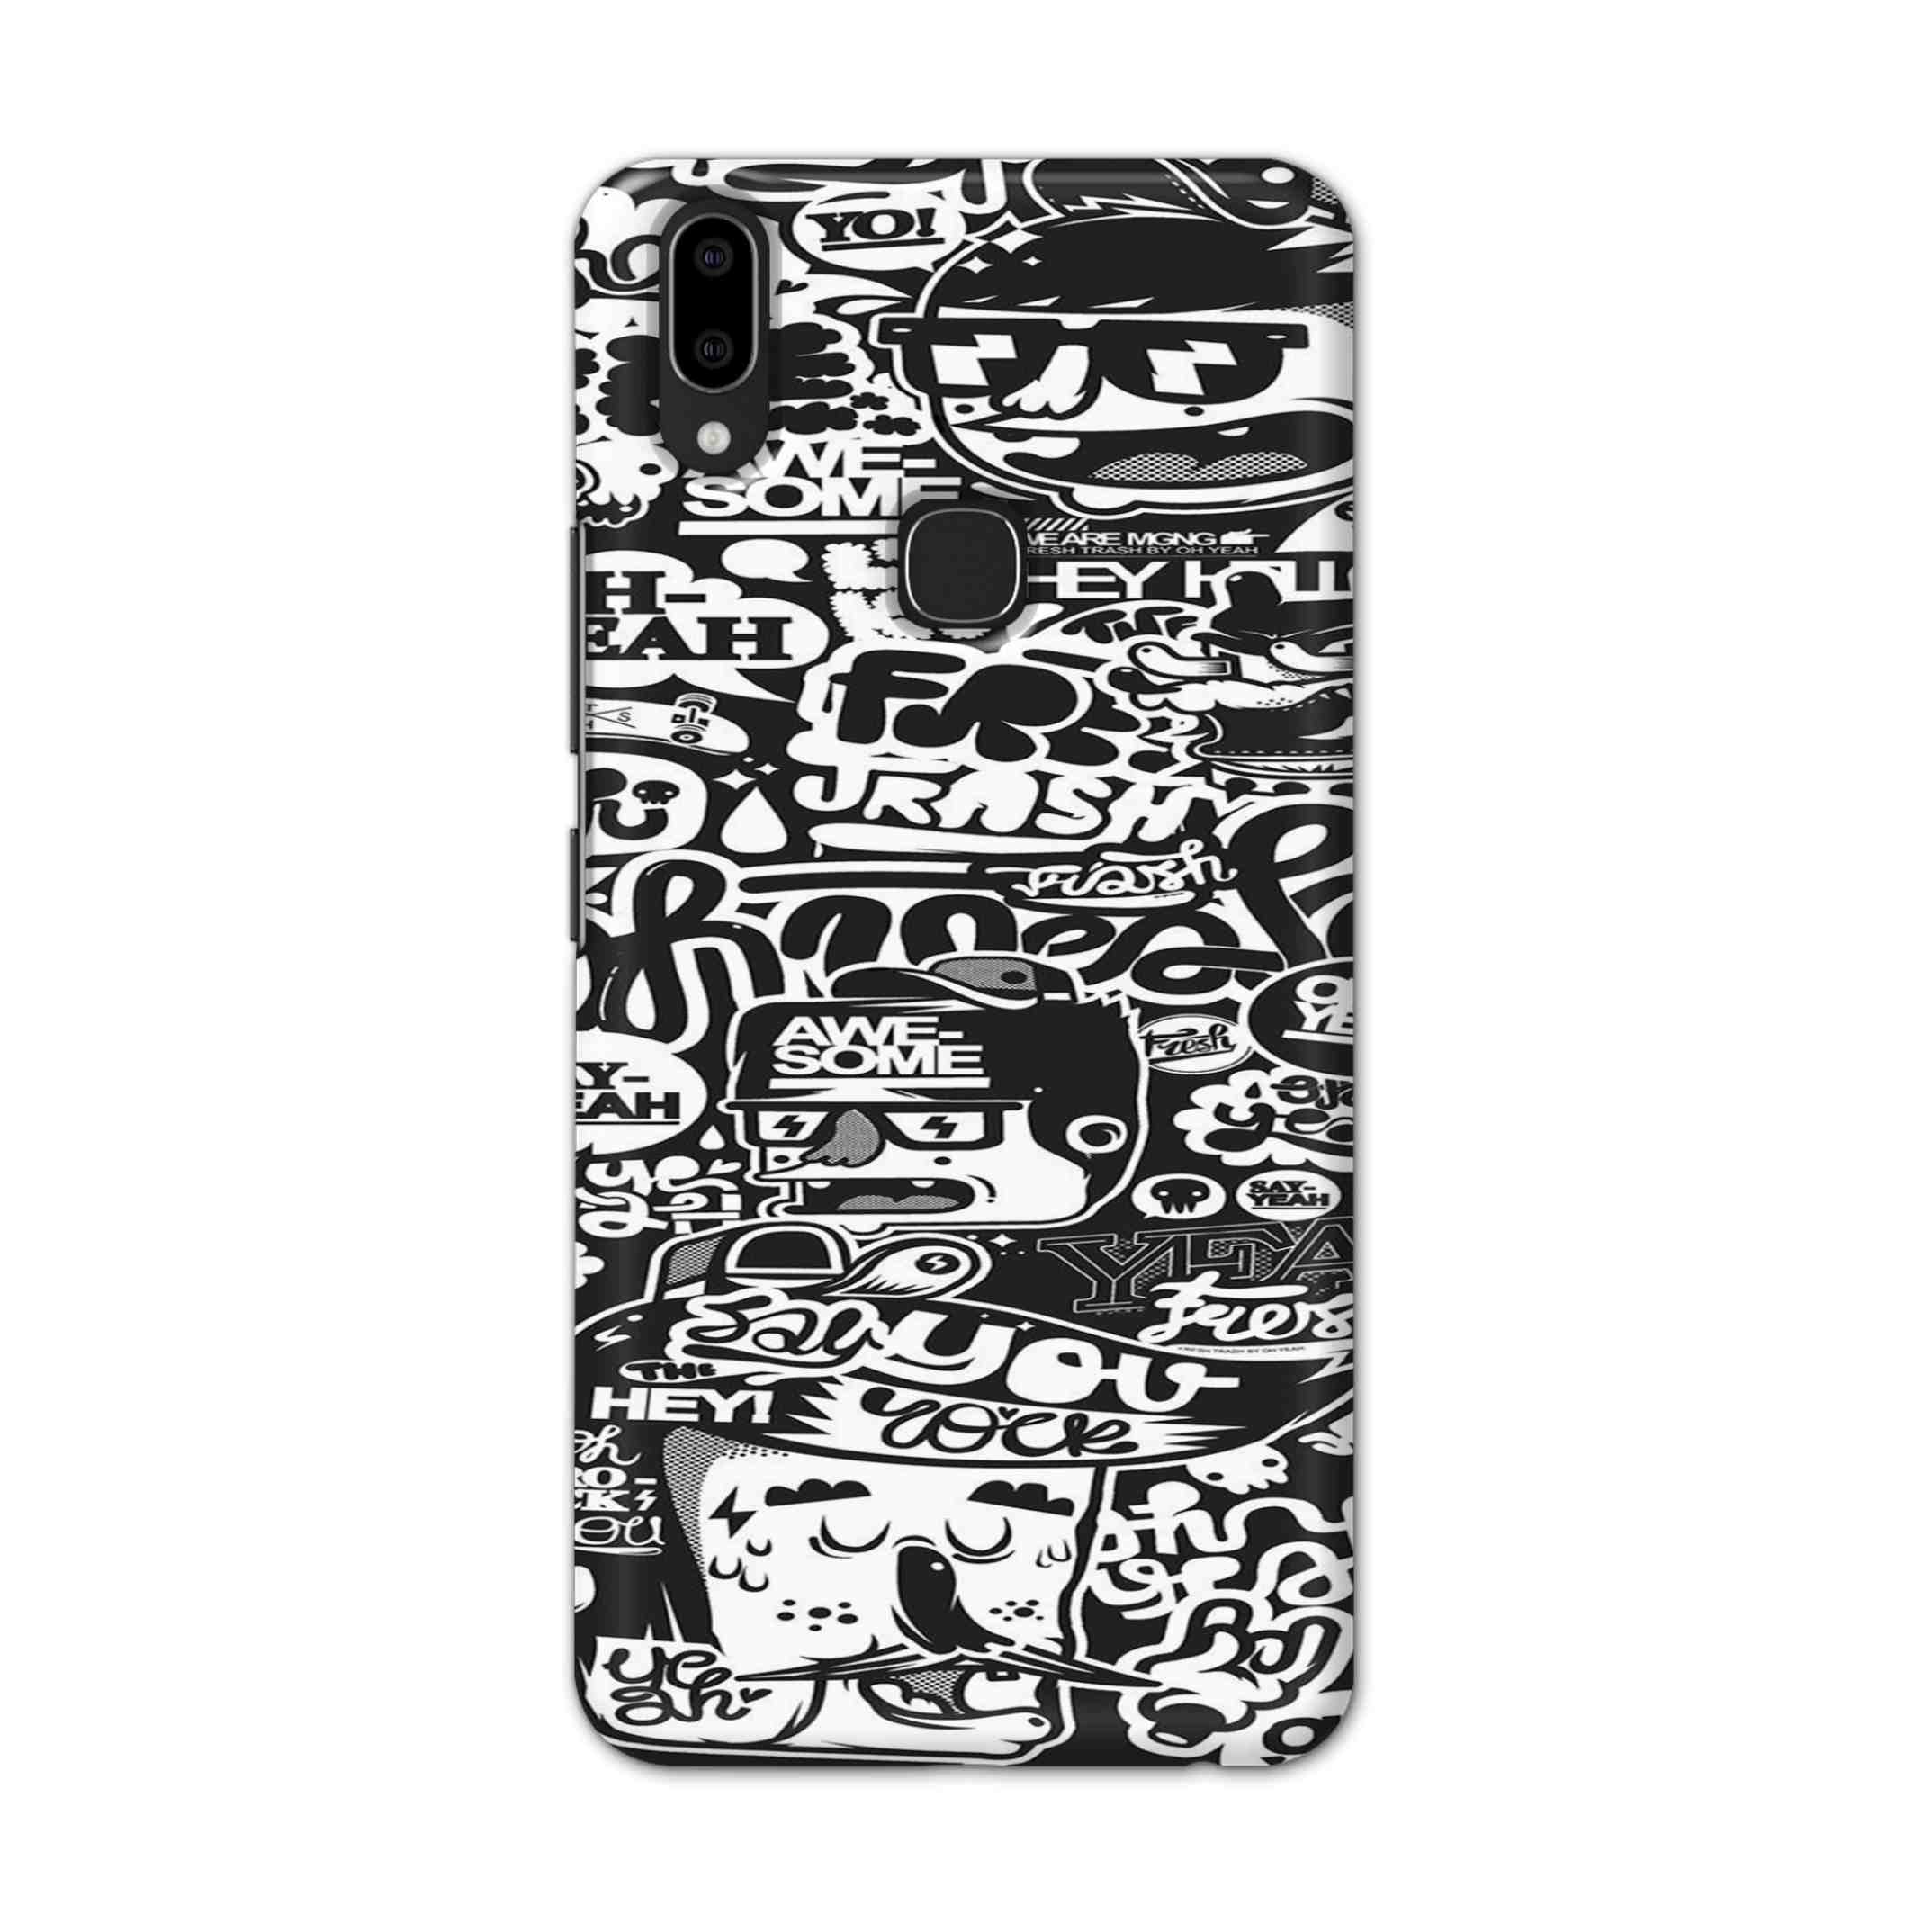 Buy Awesome Hard Back Mobile Phone Case Cover For Vivo V9 / V9 Youth Online